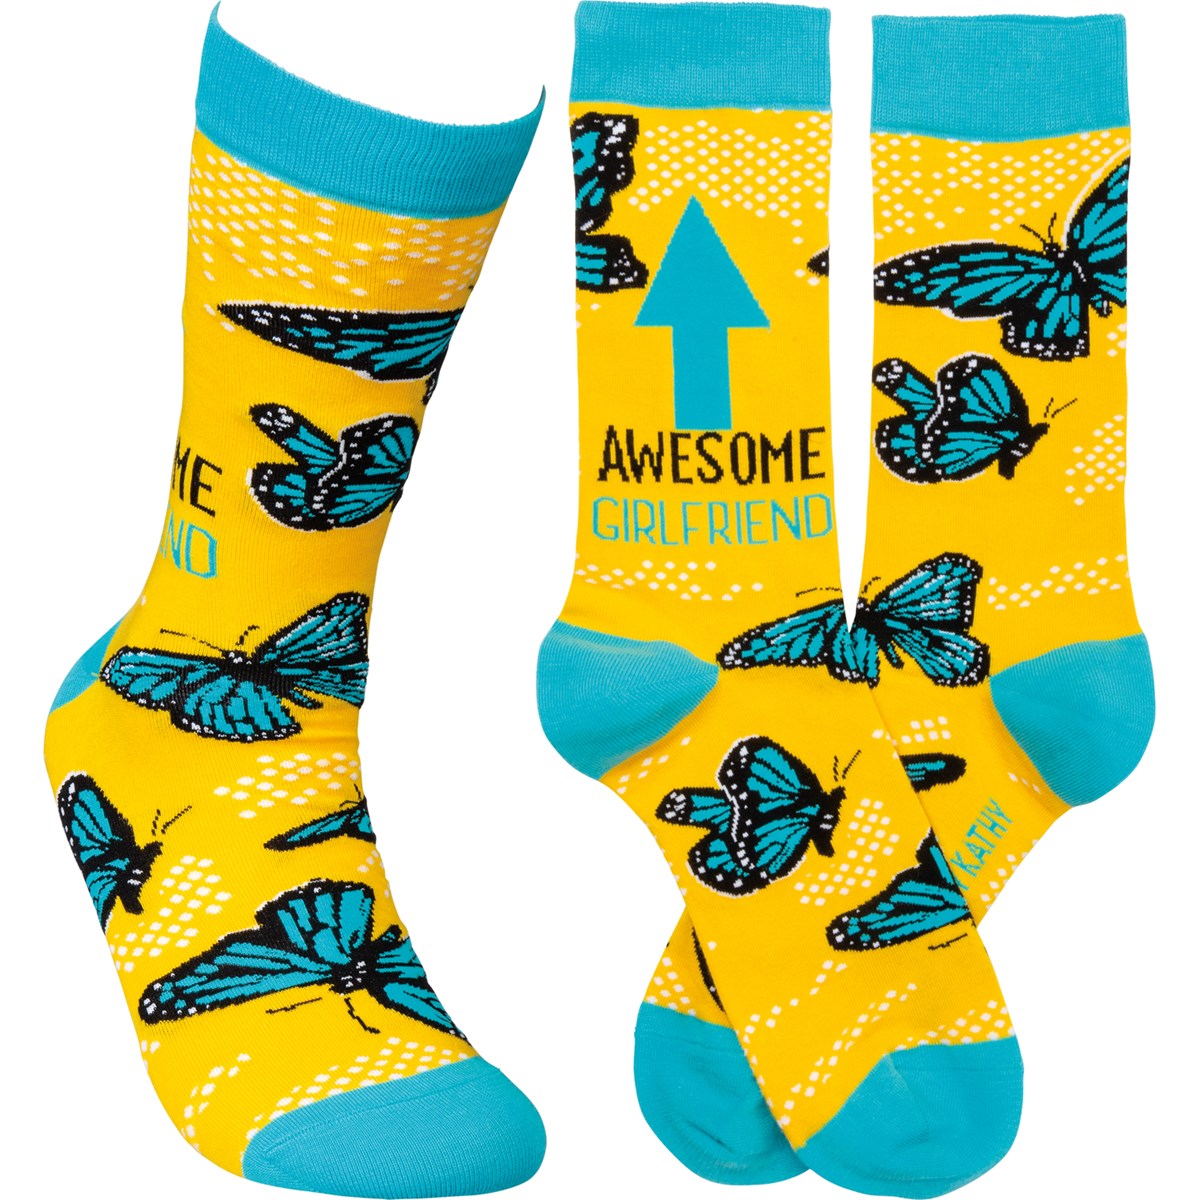 Awesome Girlfriend Socks - Cotton, Nylon, Spandex